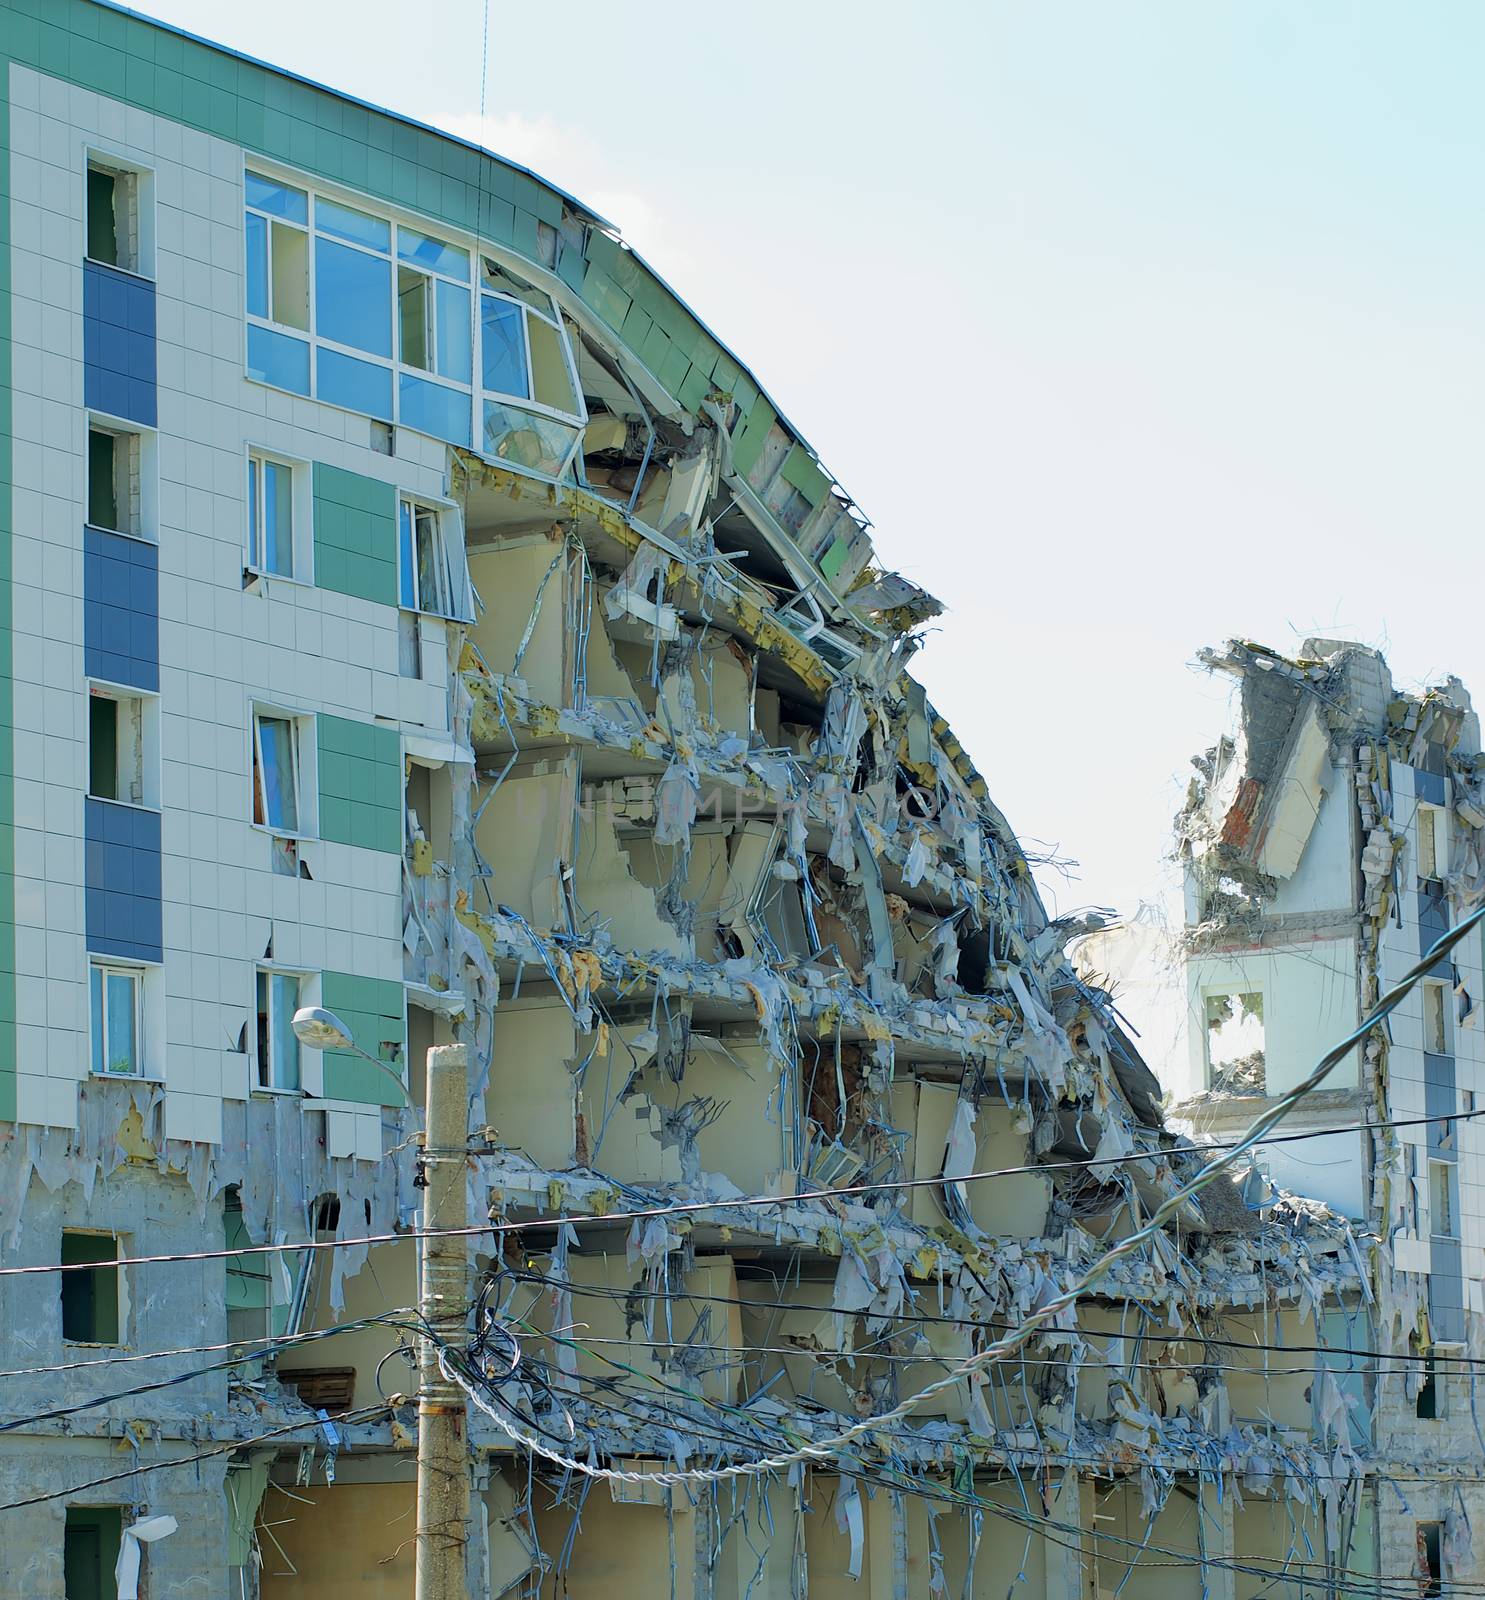 Destroyed Modern Building by zhekos